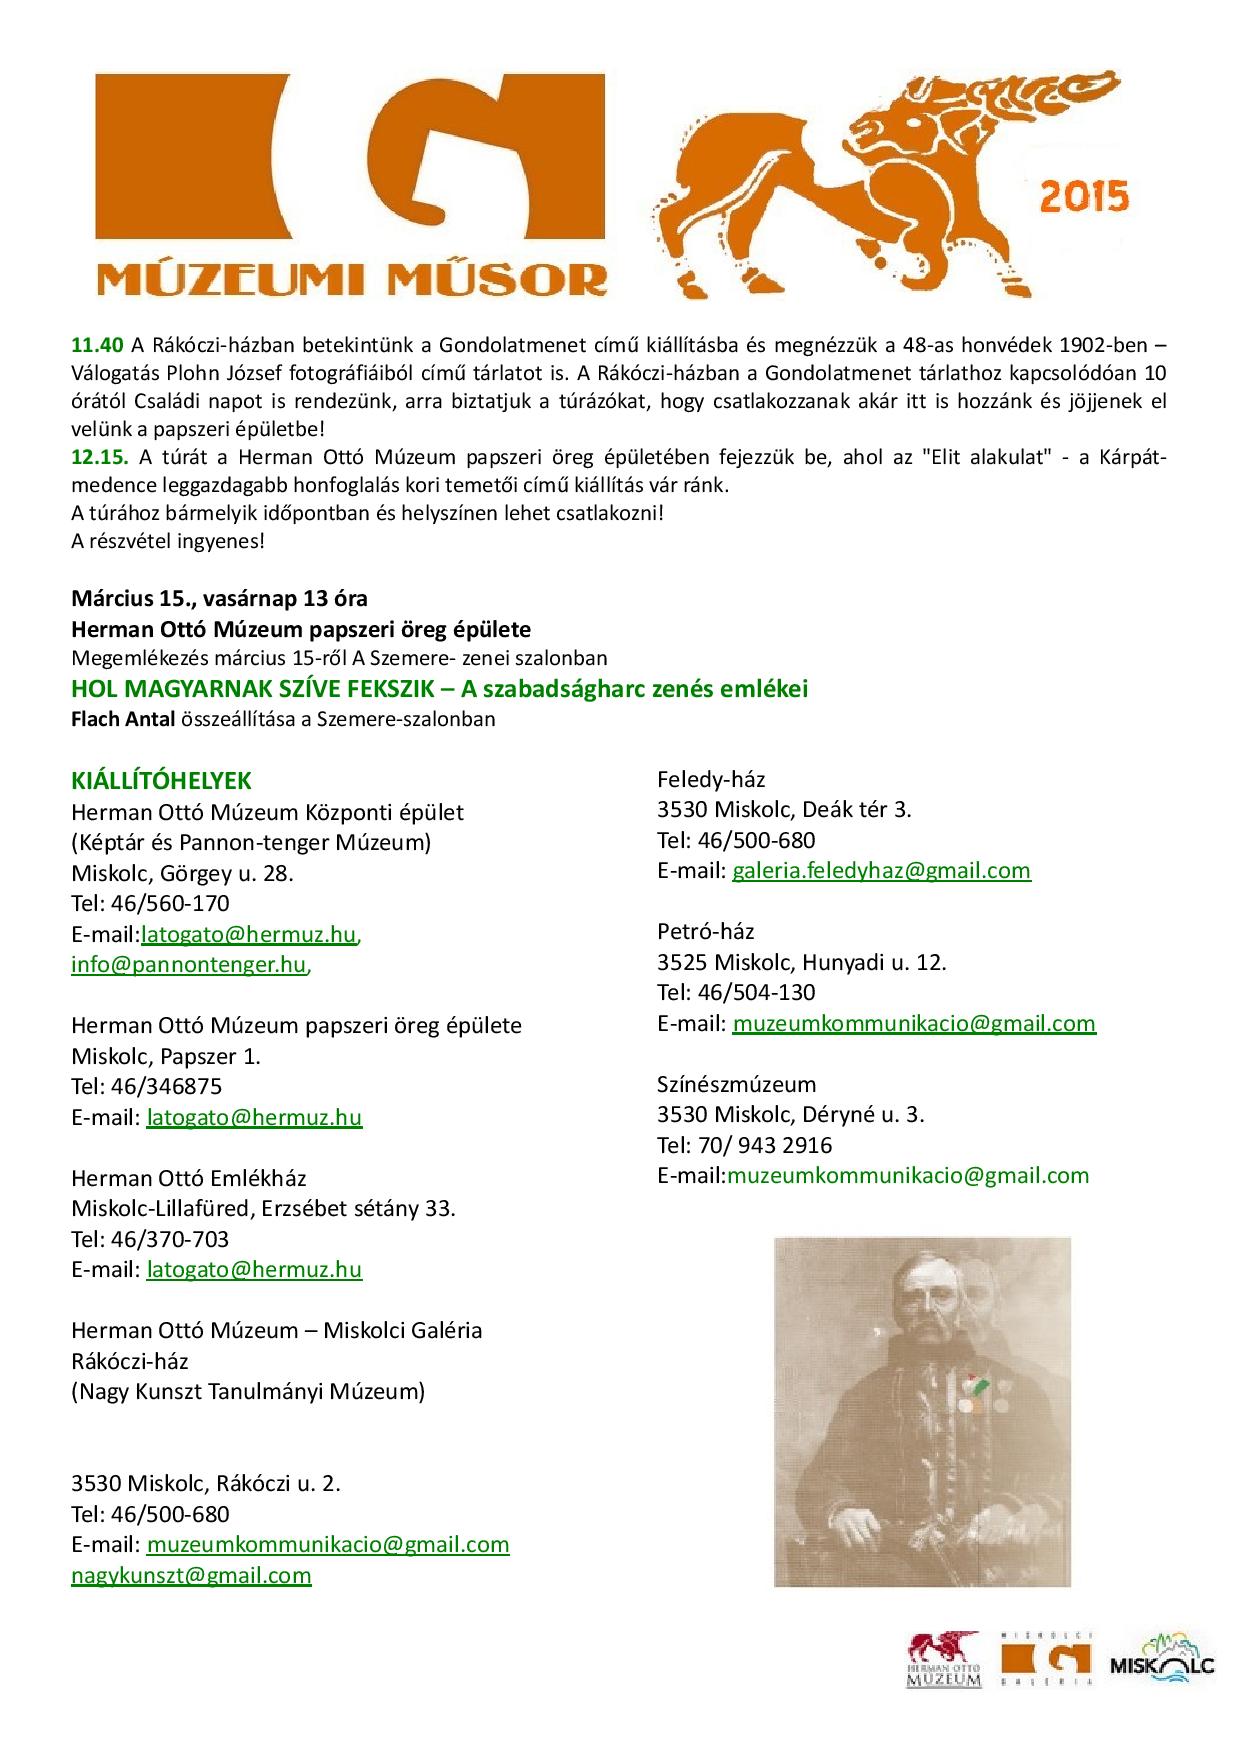 Múzeumi műsor - Március 15.-page-002